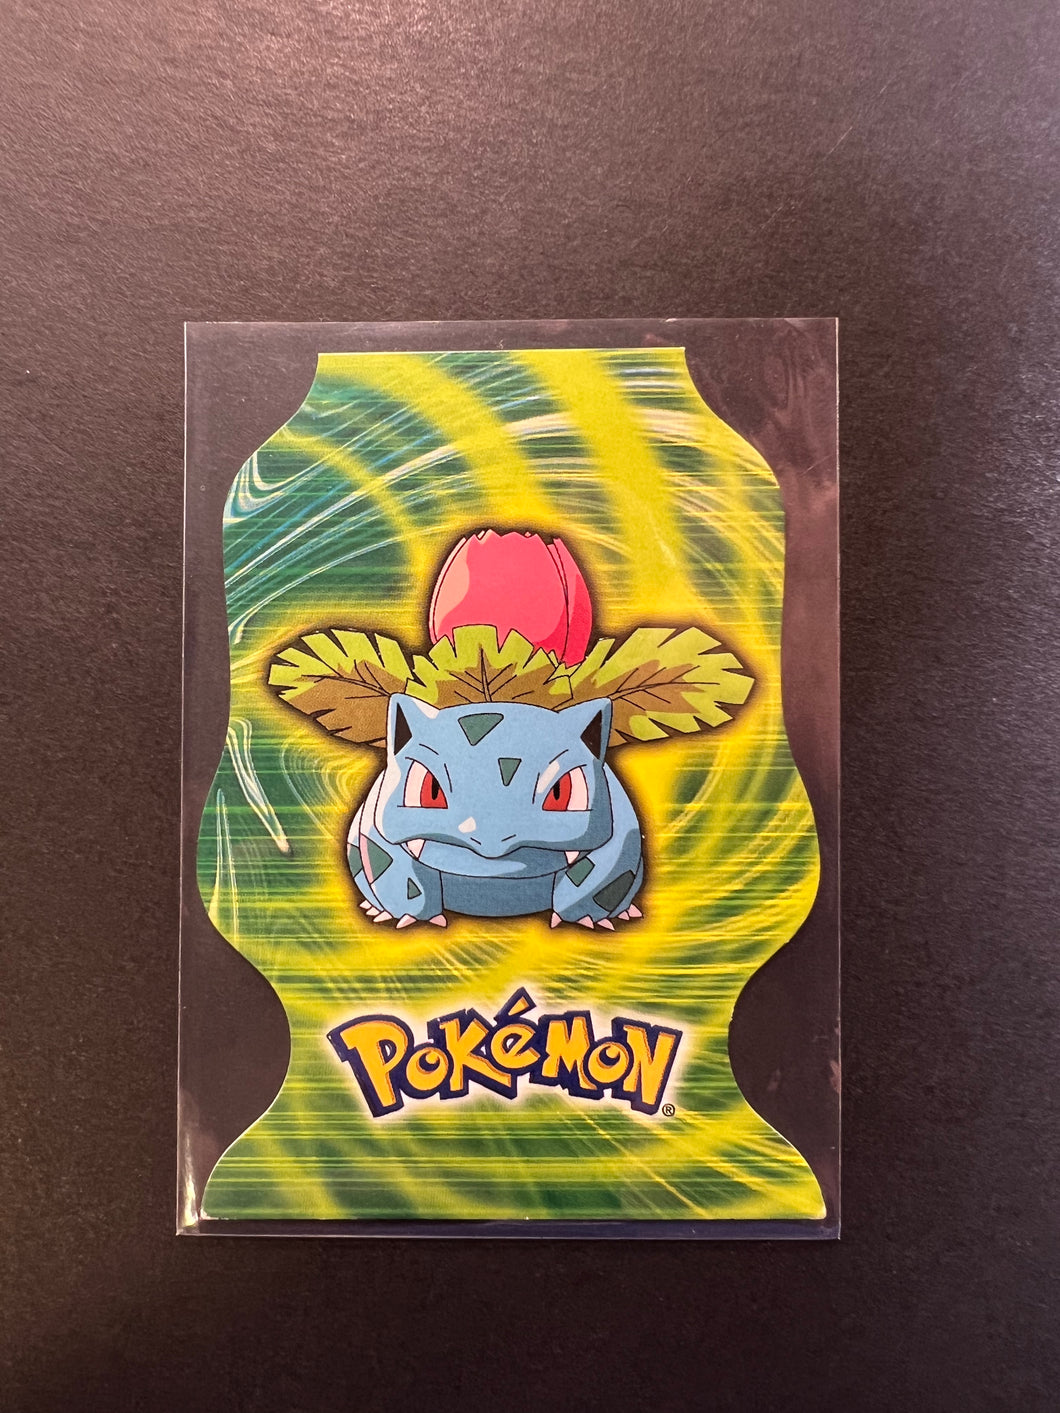 TCG Pokemon Card 151 - #83 Farfetch'd